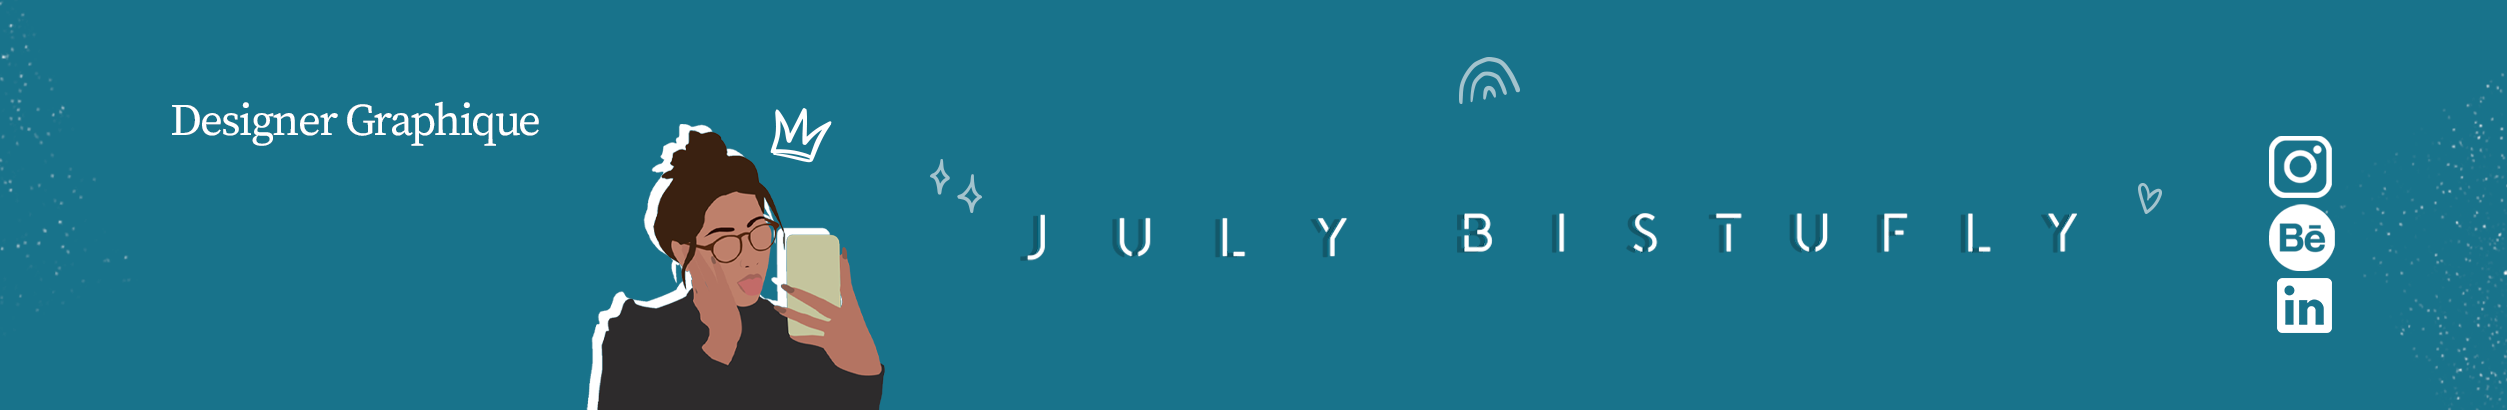 July Bistufly's profile banner